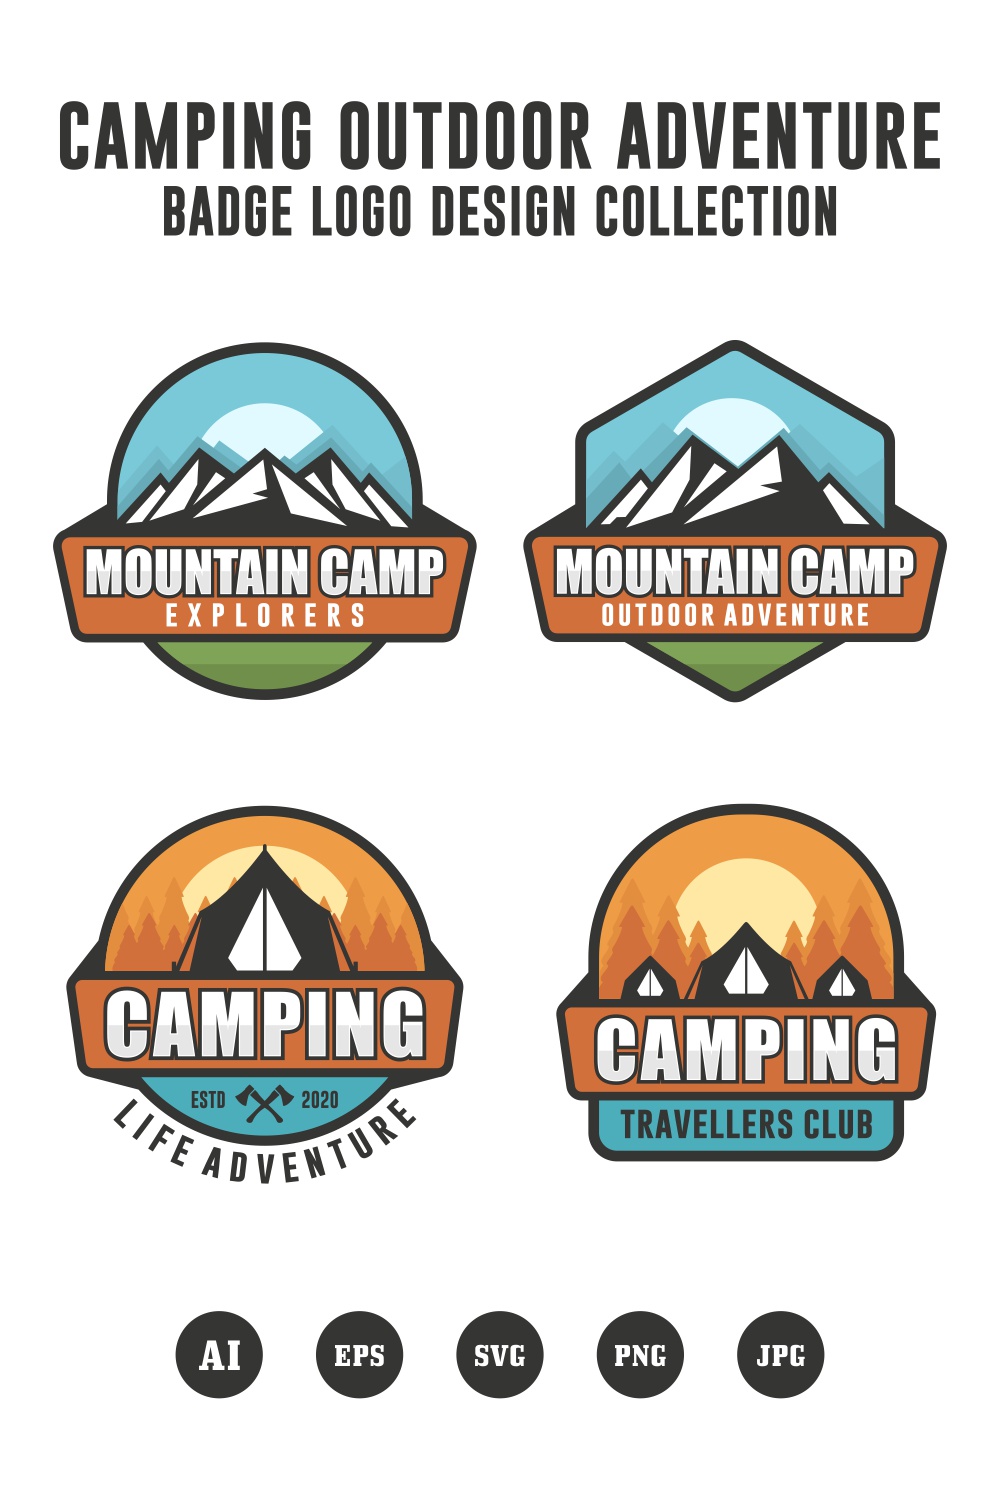 Set Camping outdoor adventure logo design - $4 pinterest preview image.